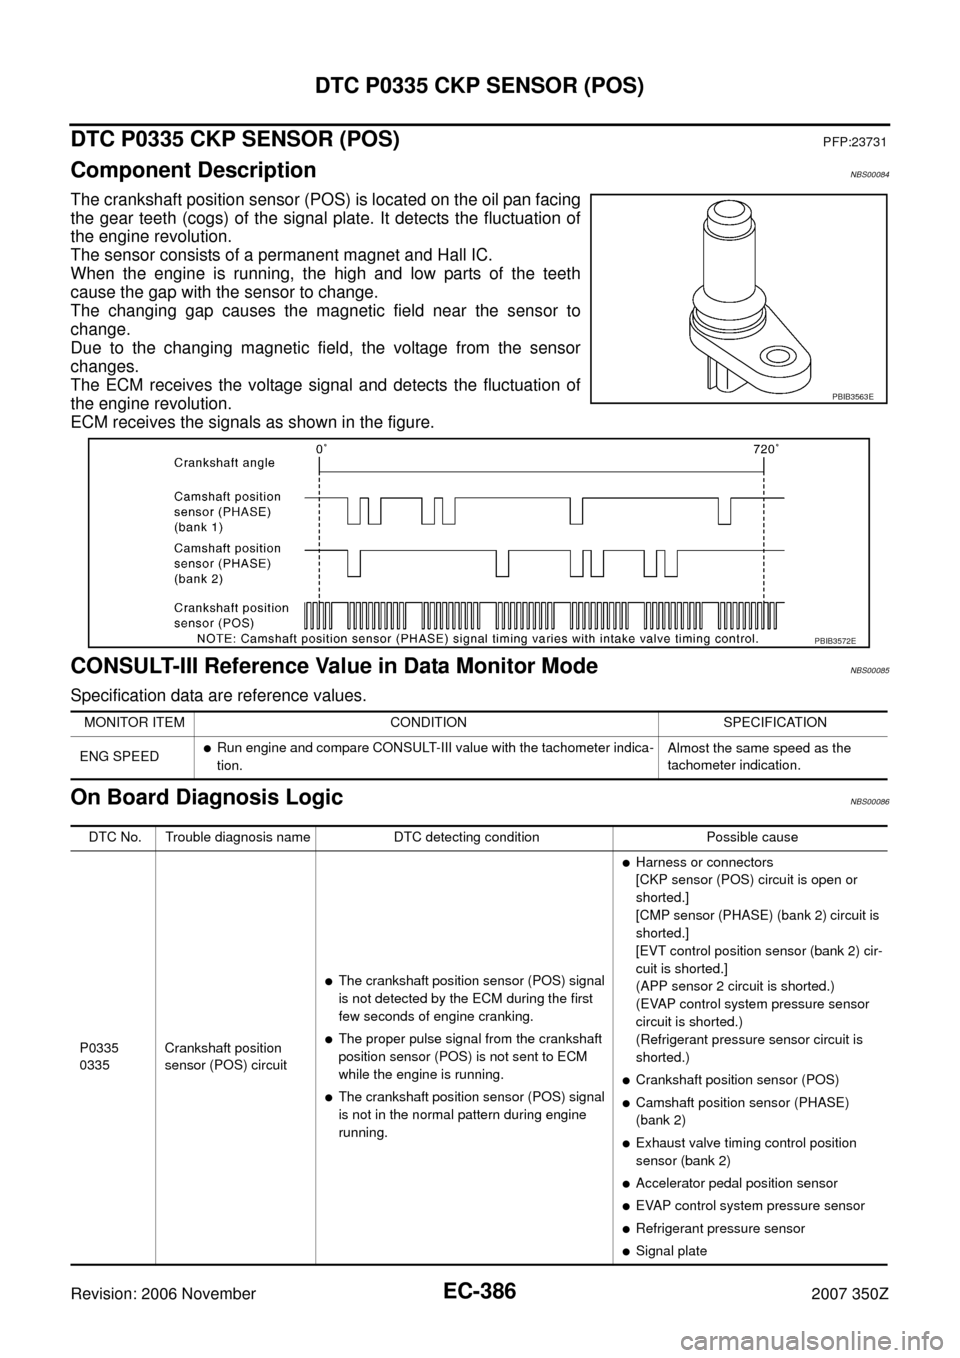 NISSAN 350Z 2007 Z33 Engine Control User Guide EC-386
DTC P0335 CKP SENSOR (POS)
Revision: 2006 November2007 350Z
DTC P0335 CKP SENSOR (POS)PFP:23731
Component DescriptionNBS00084
The crankshaft position sensor (POS) is located on the oil pan faci